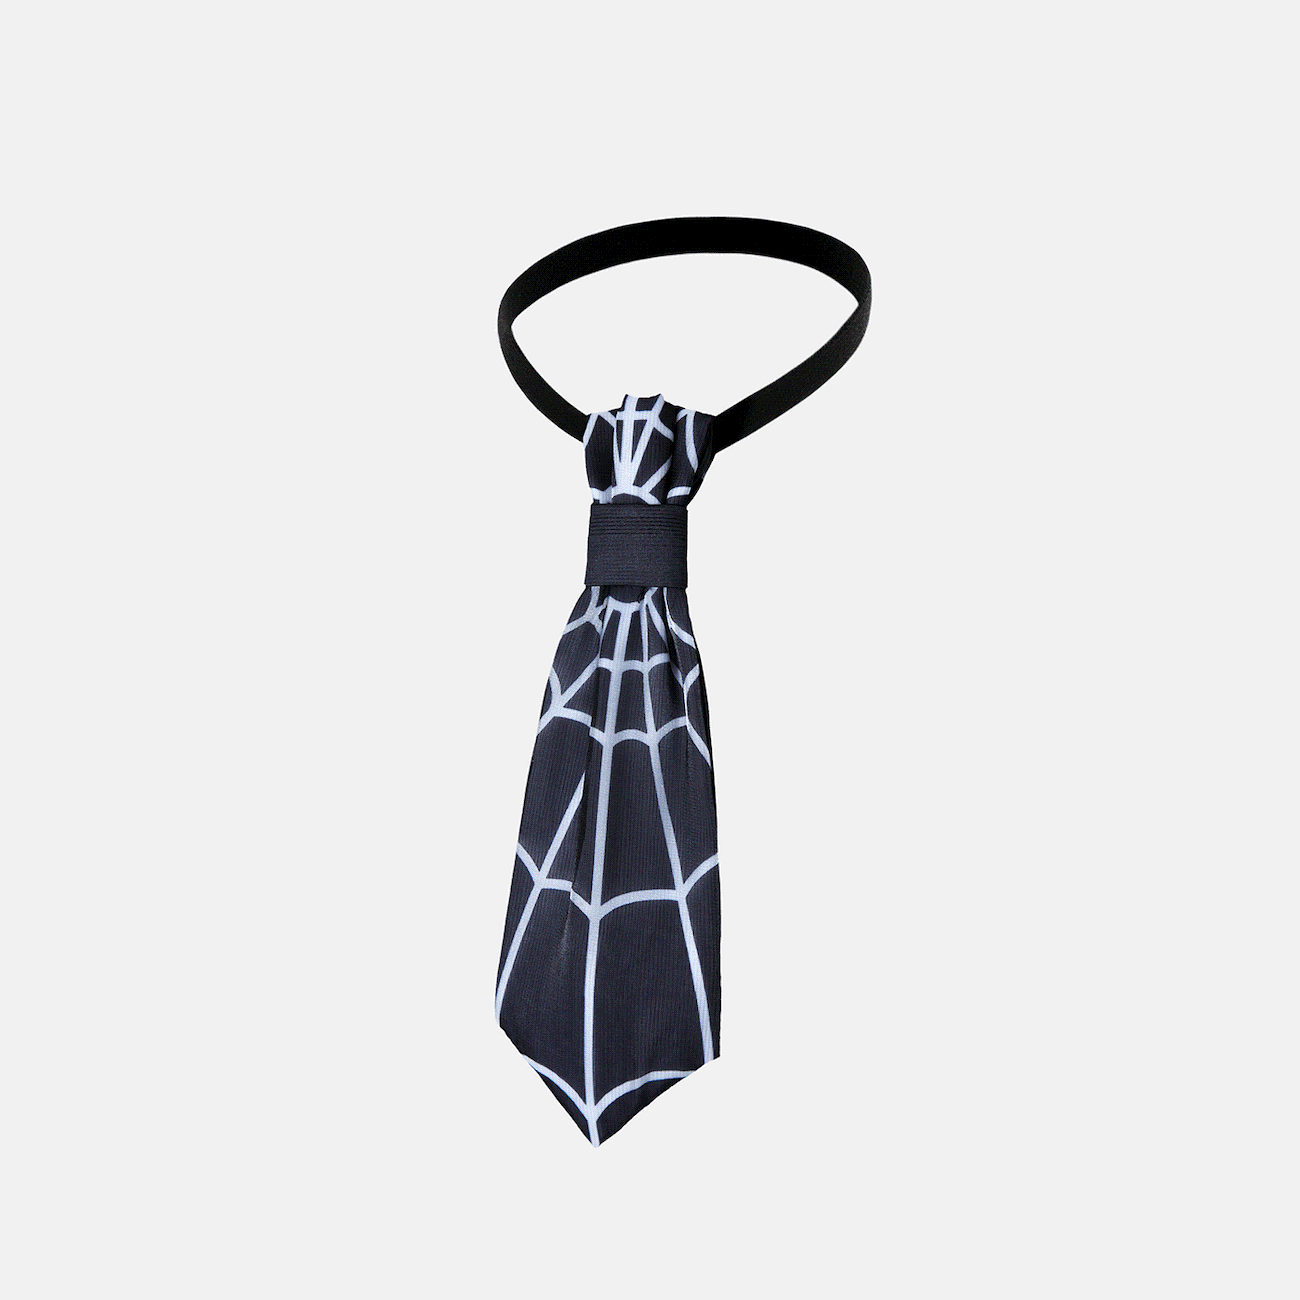 Go-Glow Halloween Light Up corbata con patrón de telaraña que incluye controlador (batería incorporada) Negro big image 1